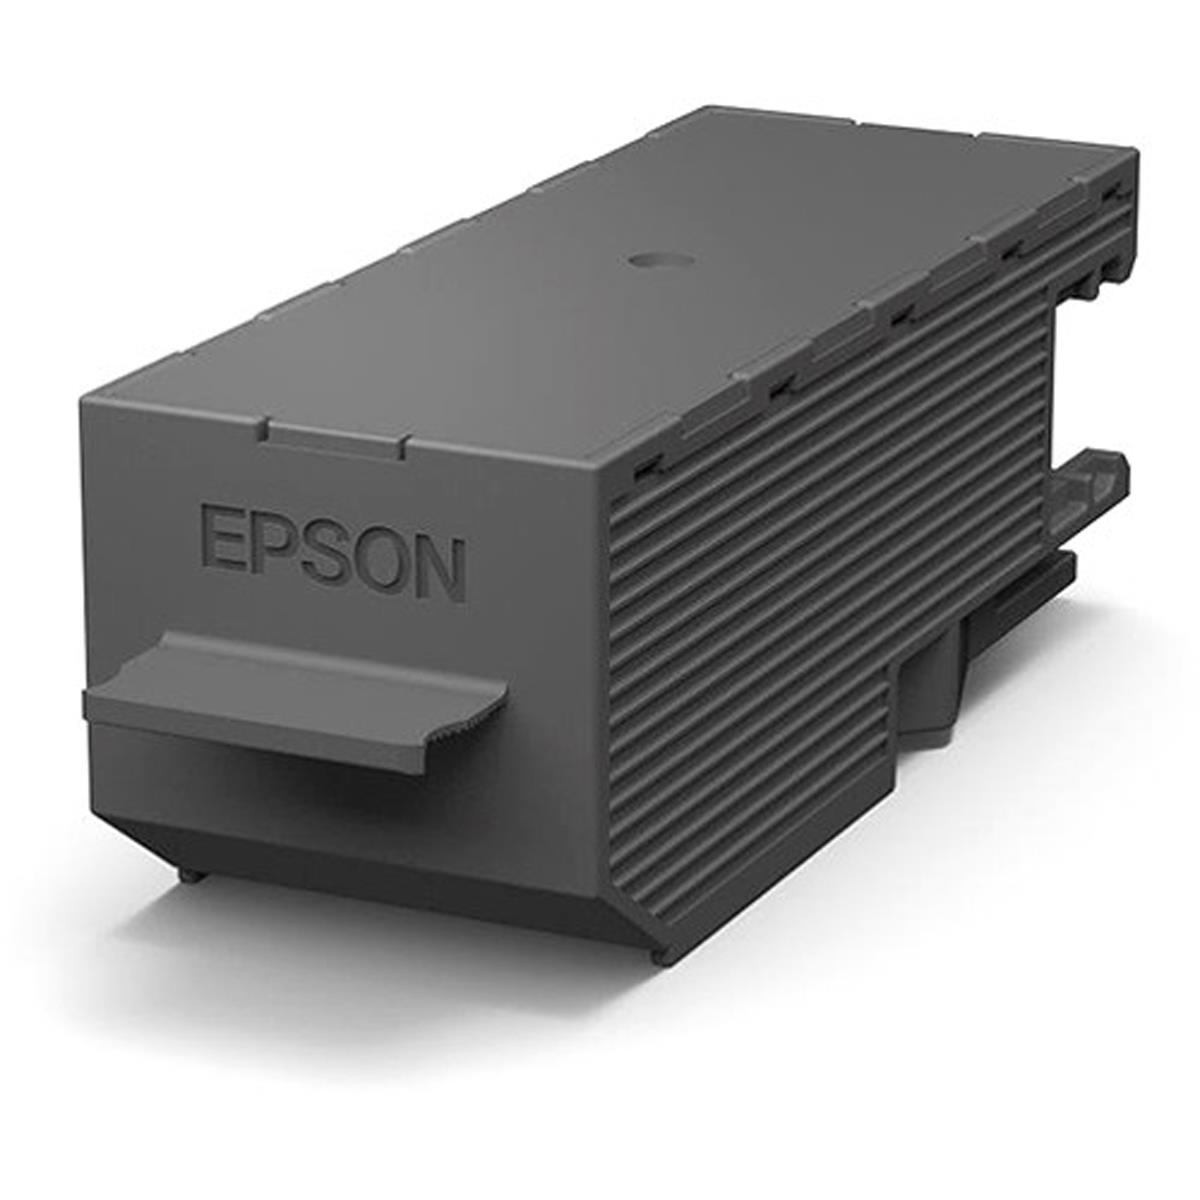 Image of Epson Ink Maintenance Box for EcoTank ET-7700 and ET-7750 Printer